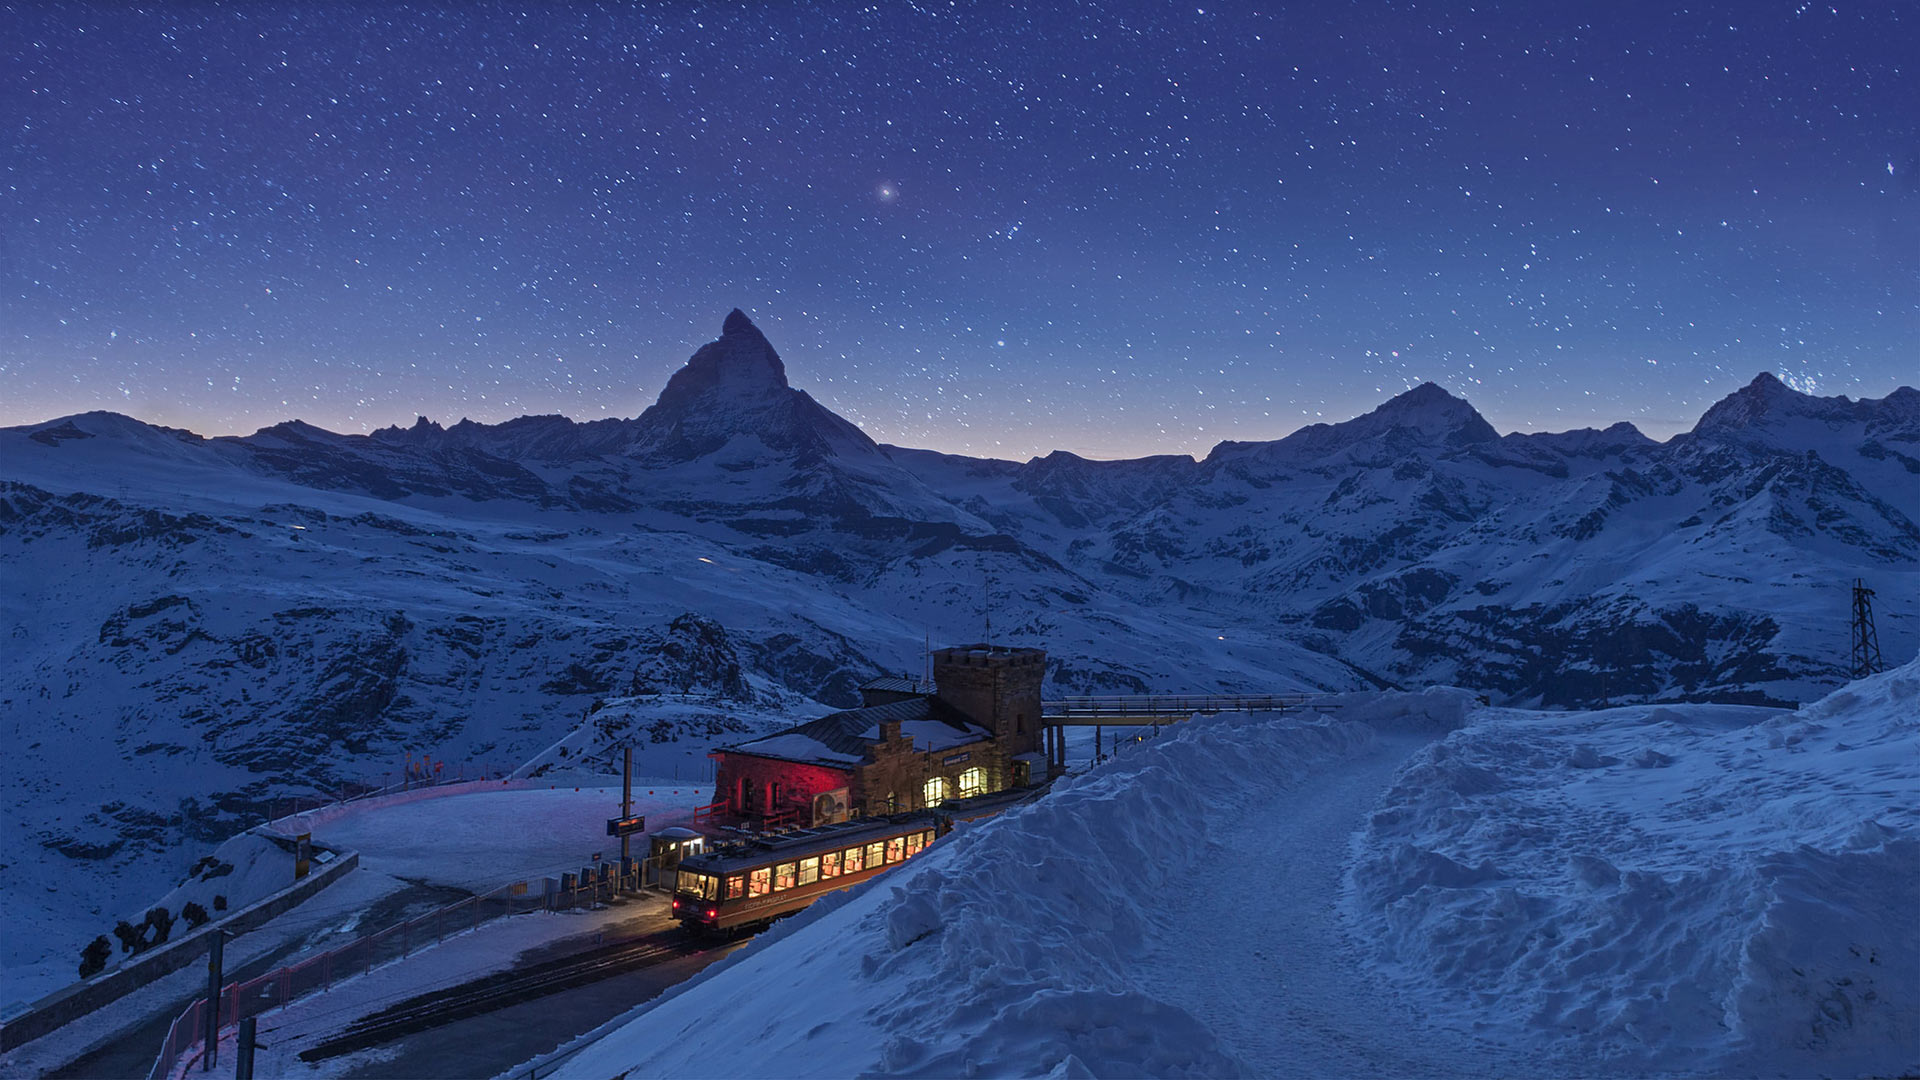 General 1920x1080 winter snow mountains night Zermatt train railway Switzerland Matterhorn low light